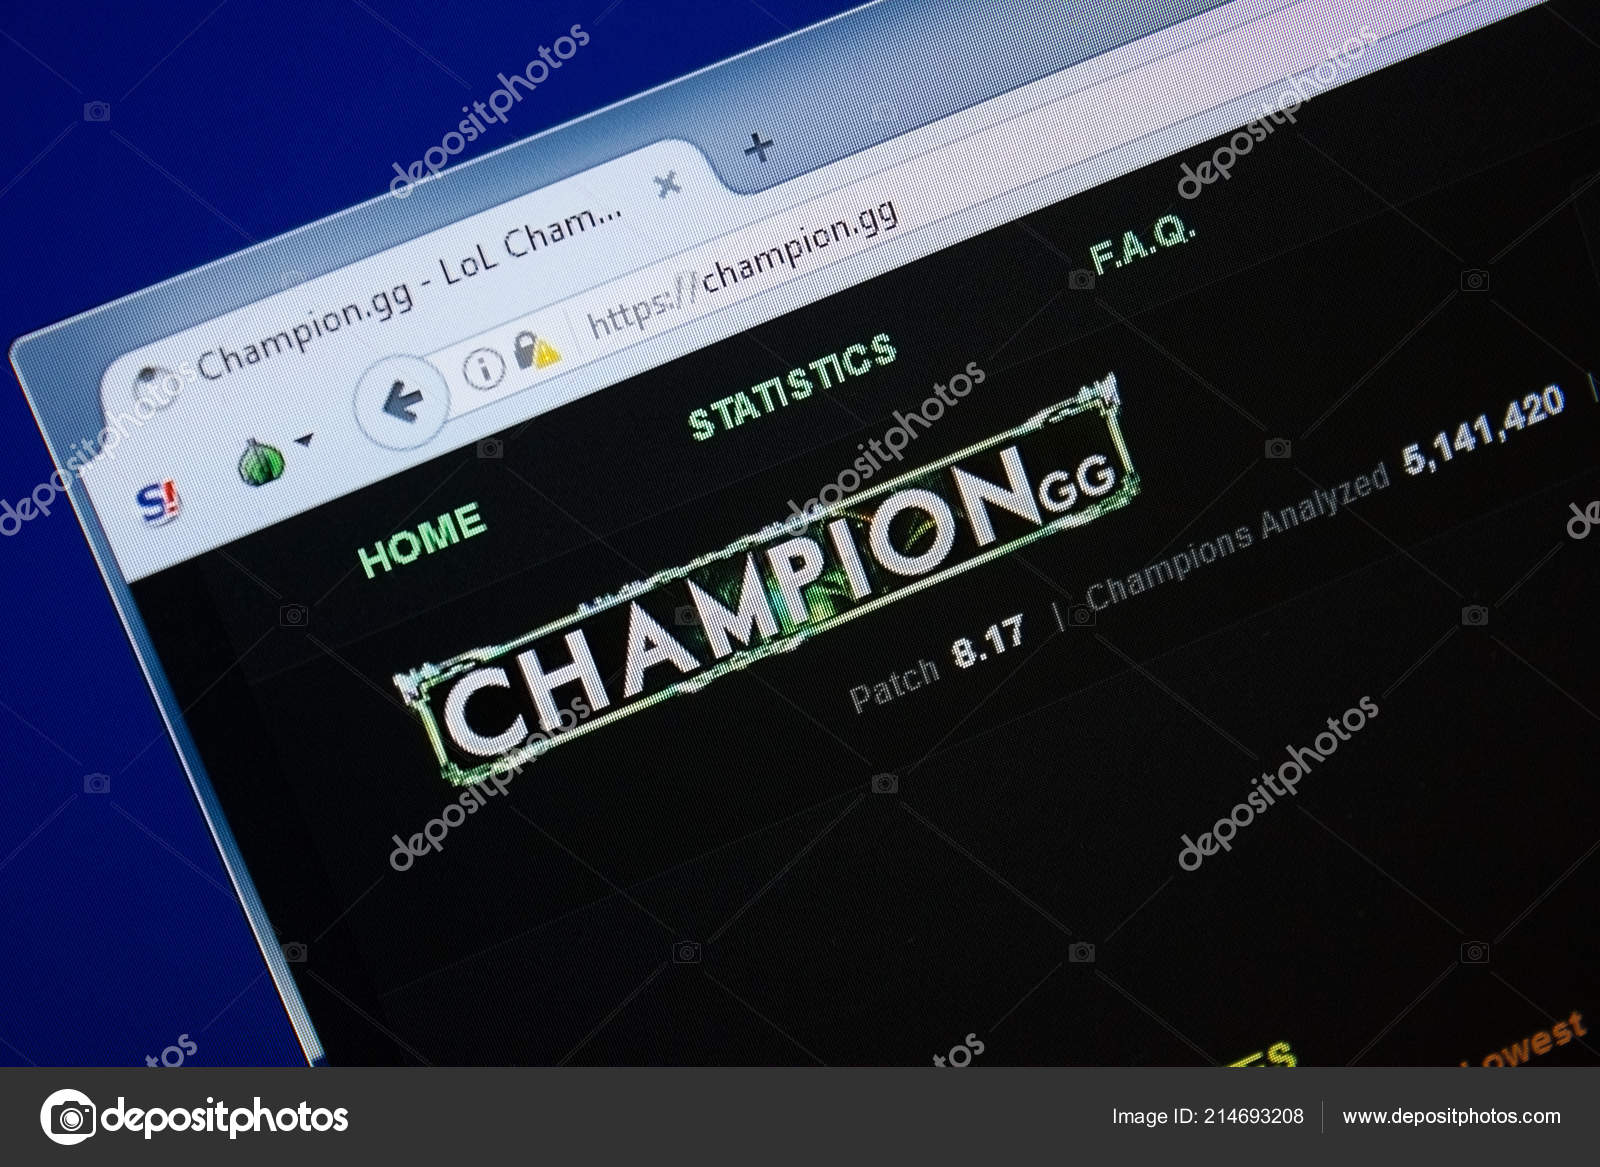 champion website